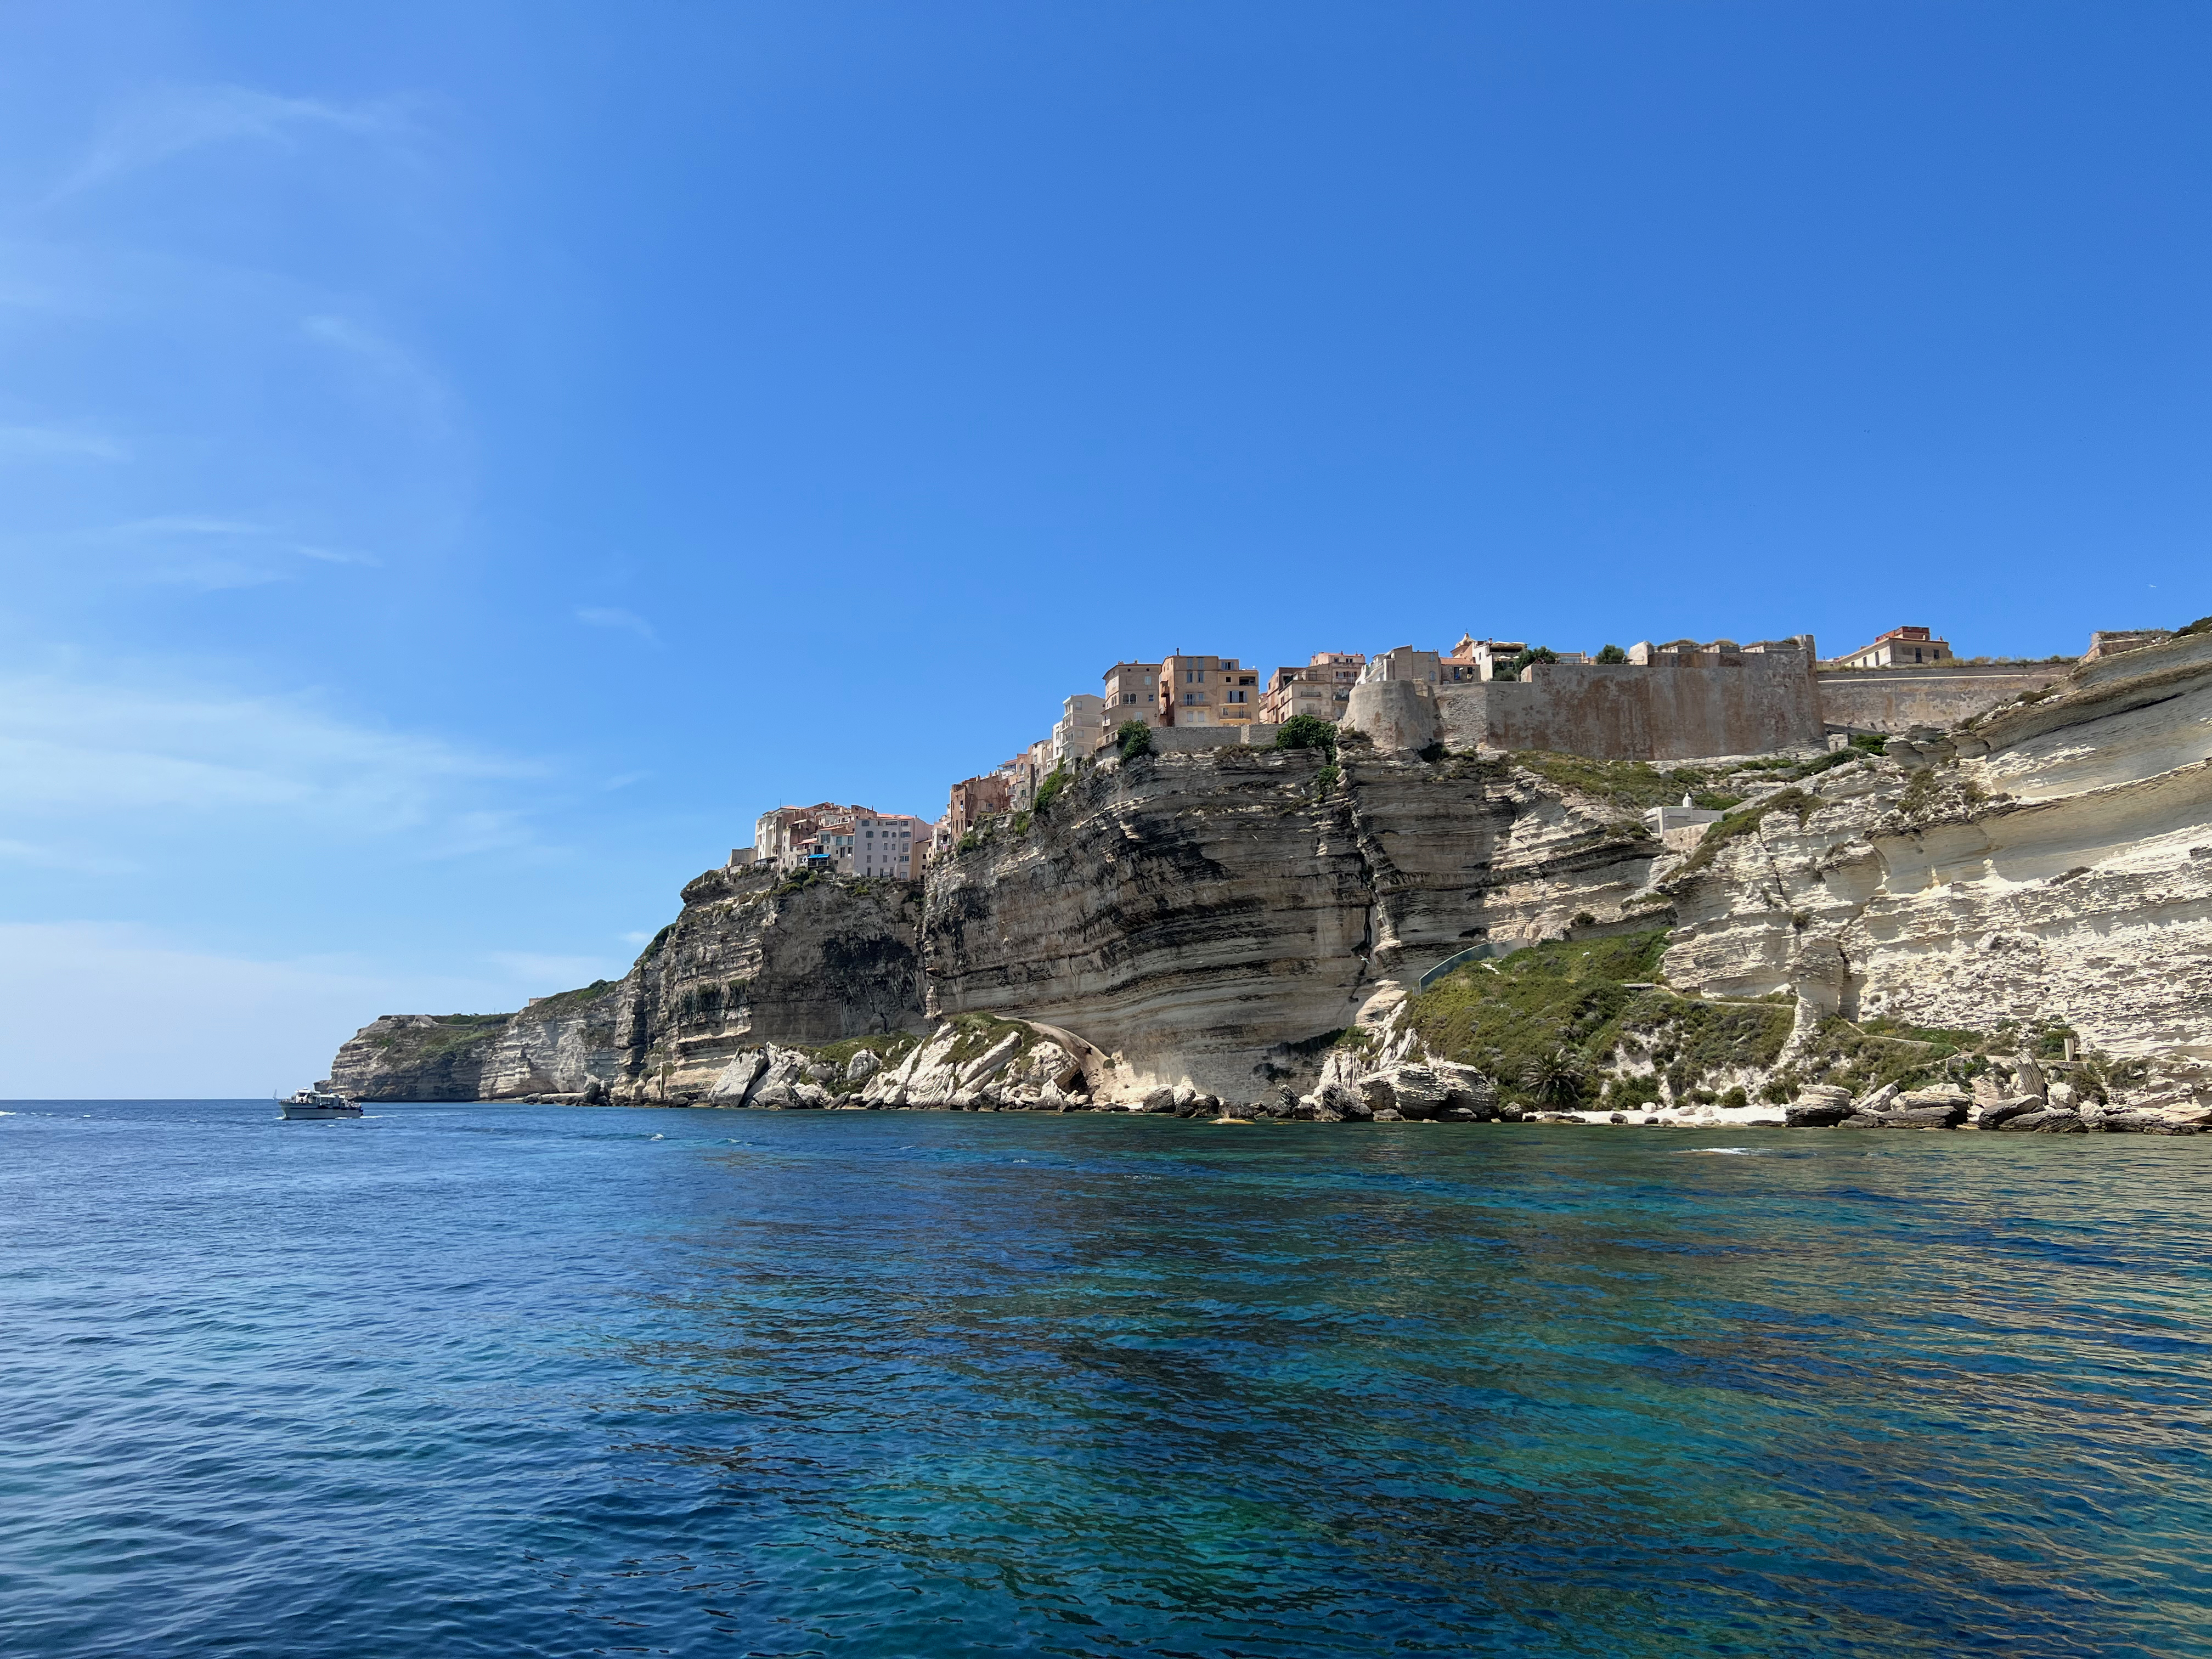 View of the limestone cliffs of Bonifacio